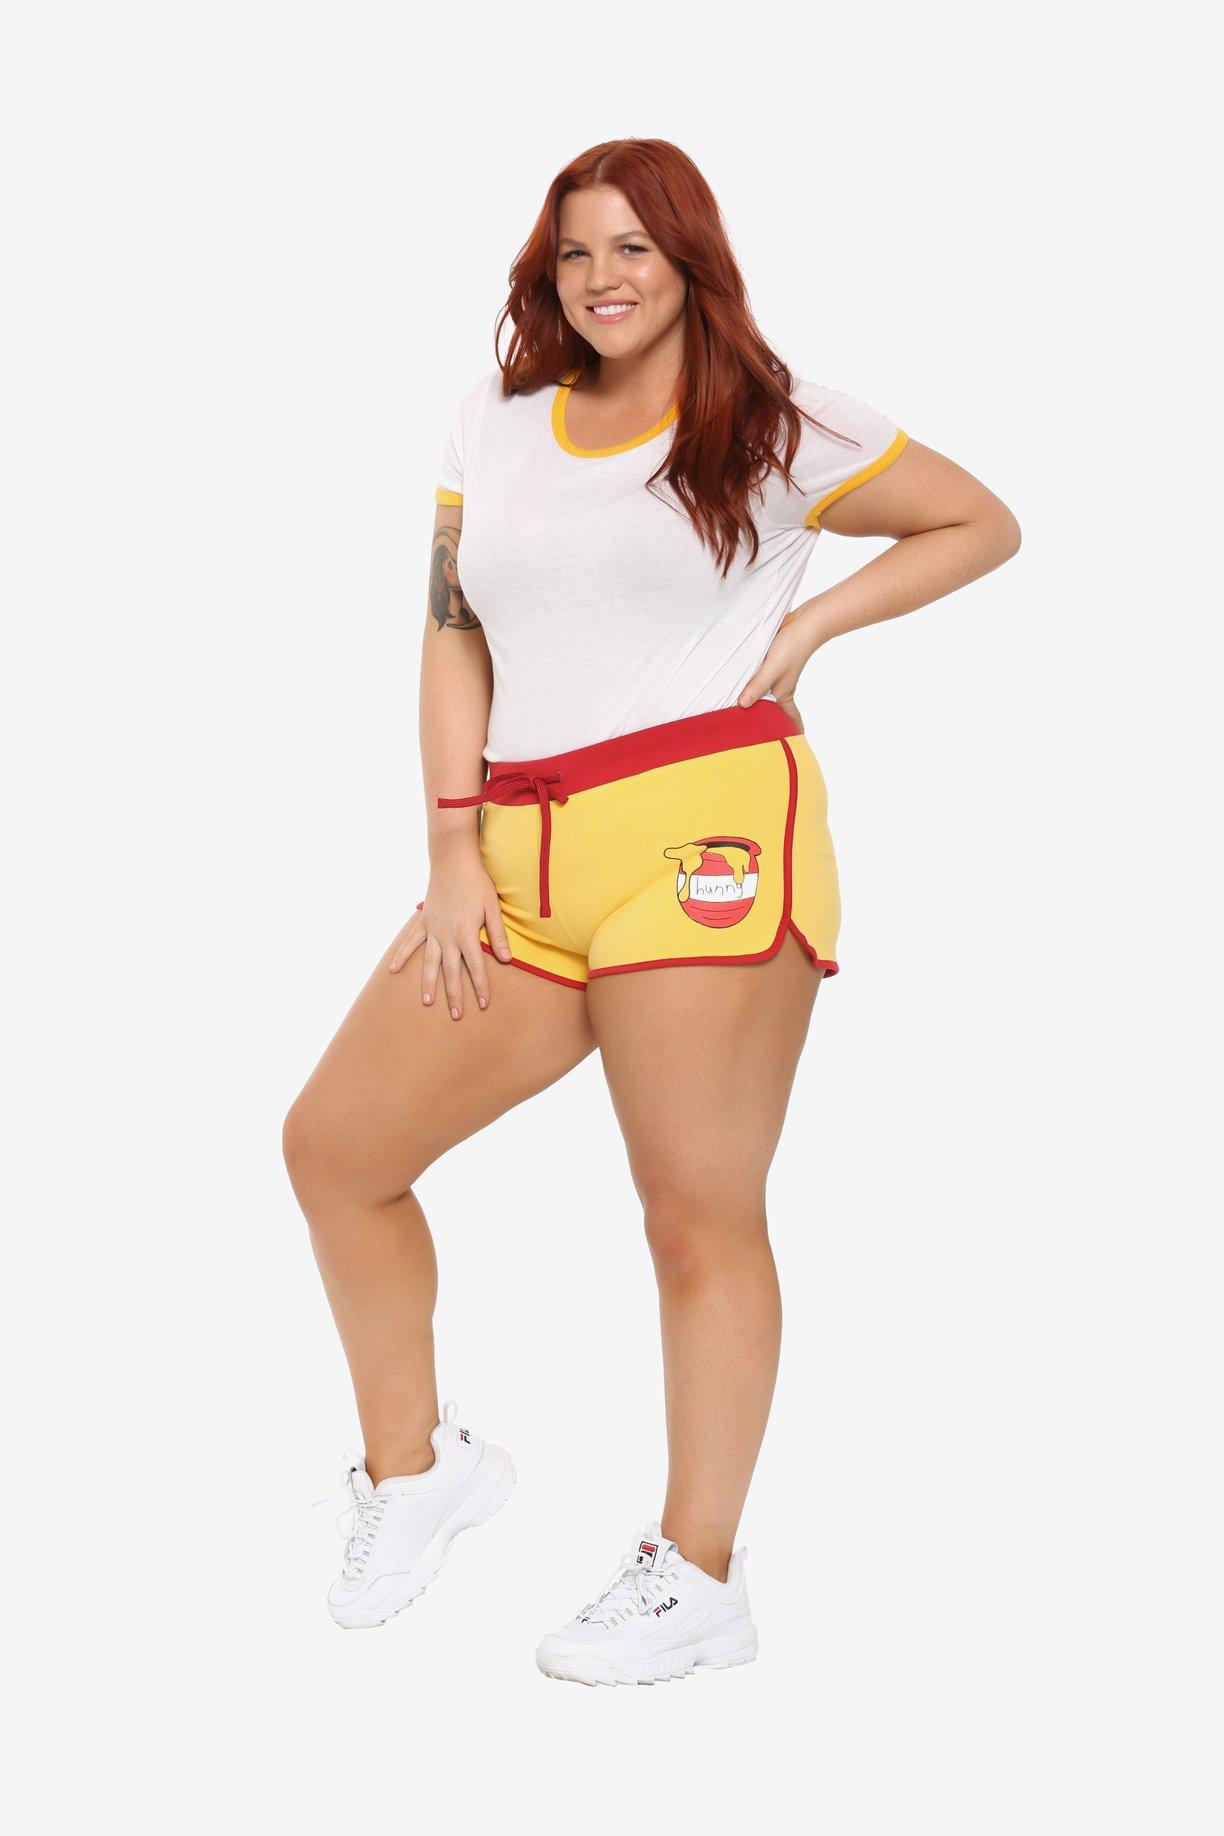 Disney Winnie The Pooh Girls Soft Shorts Plus Size, , alternate